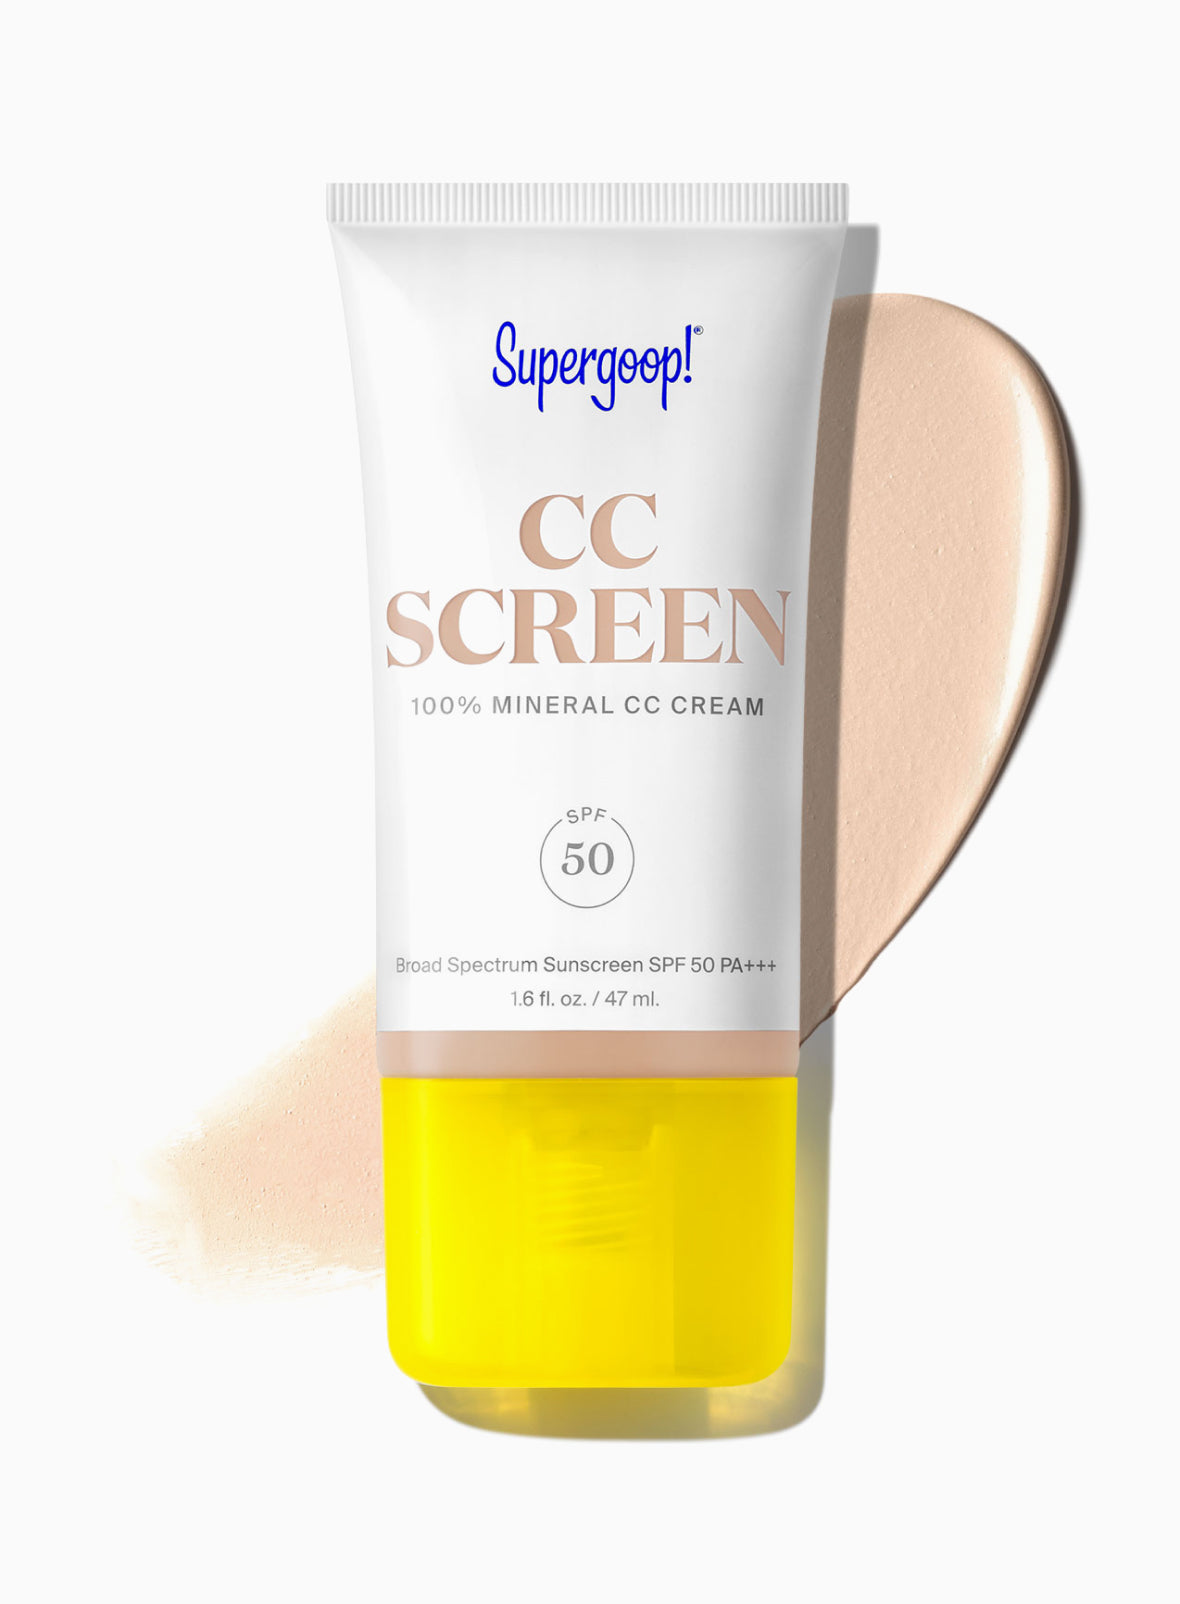 CC Screen 100% Mineral CC Cream SPF 50 105N / 1.6 fl. oz. | Supergoop!